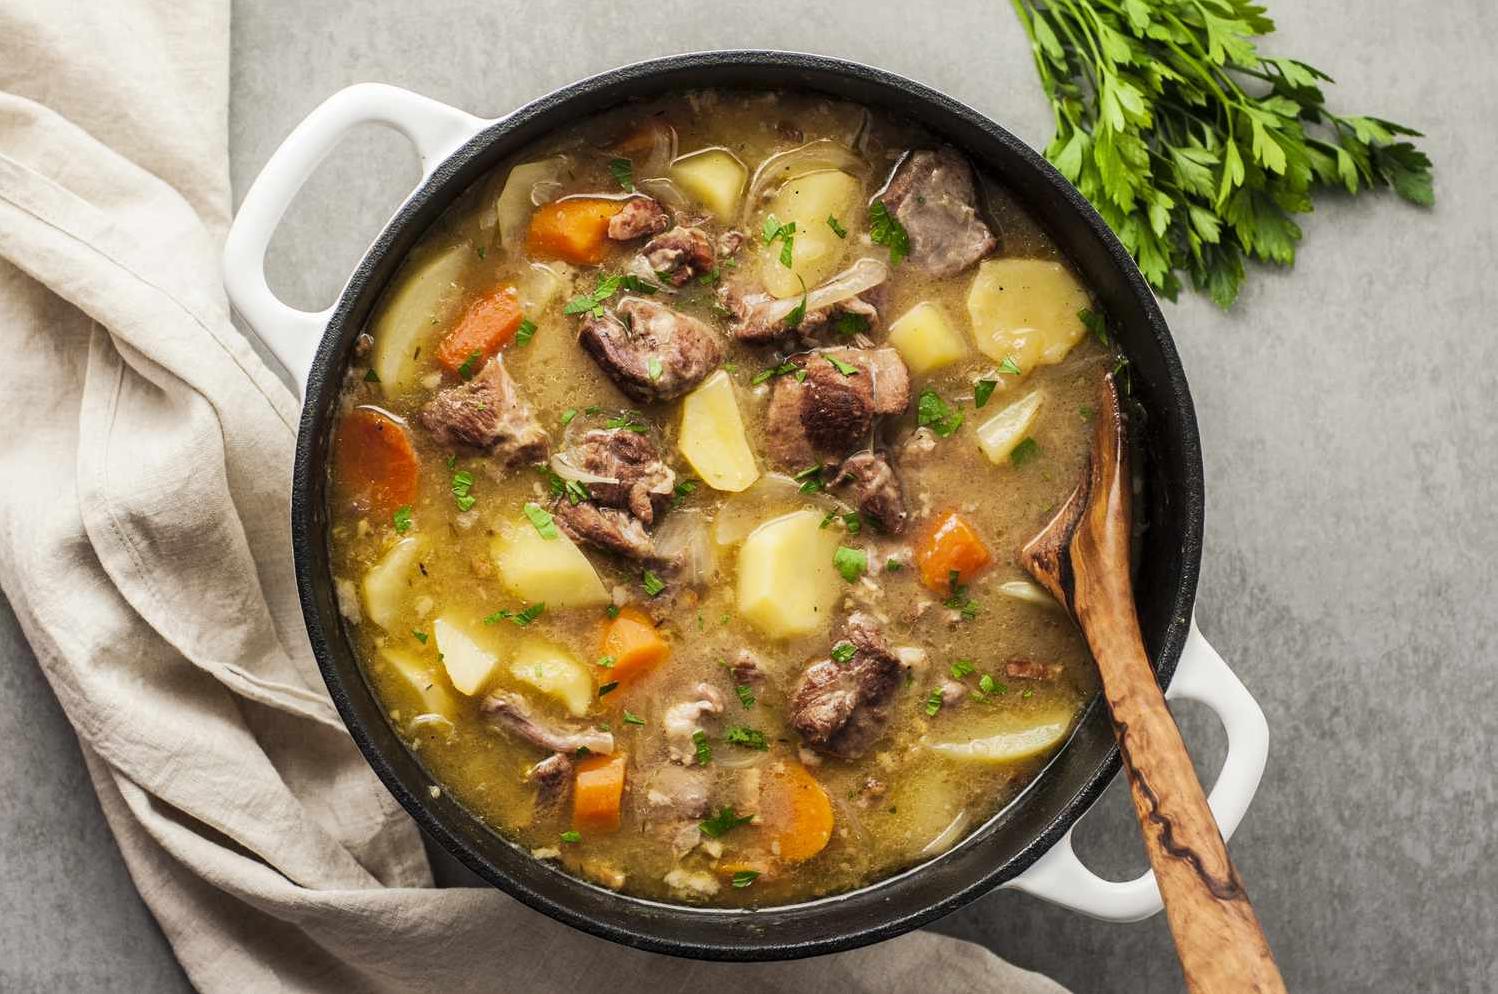  Tender vegetables make this stew a crowd-pleaser